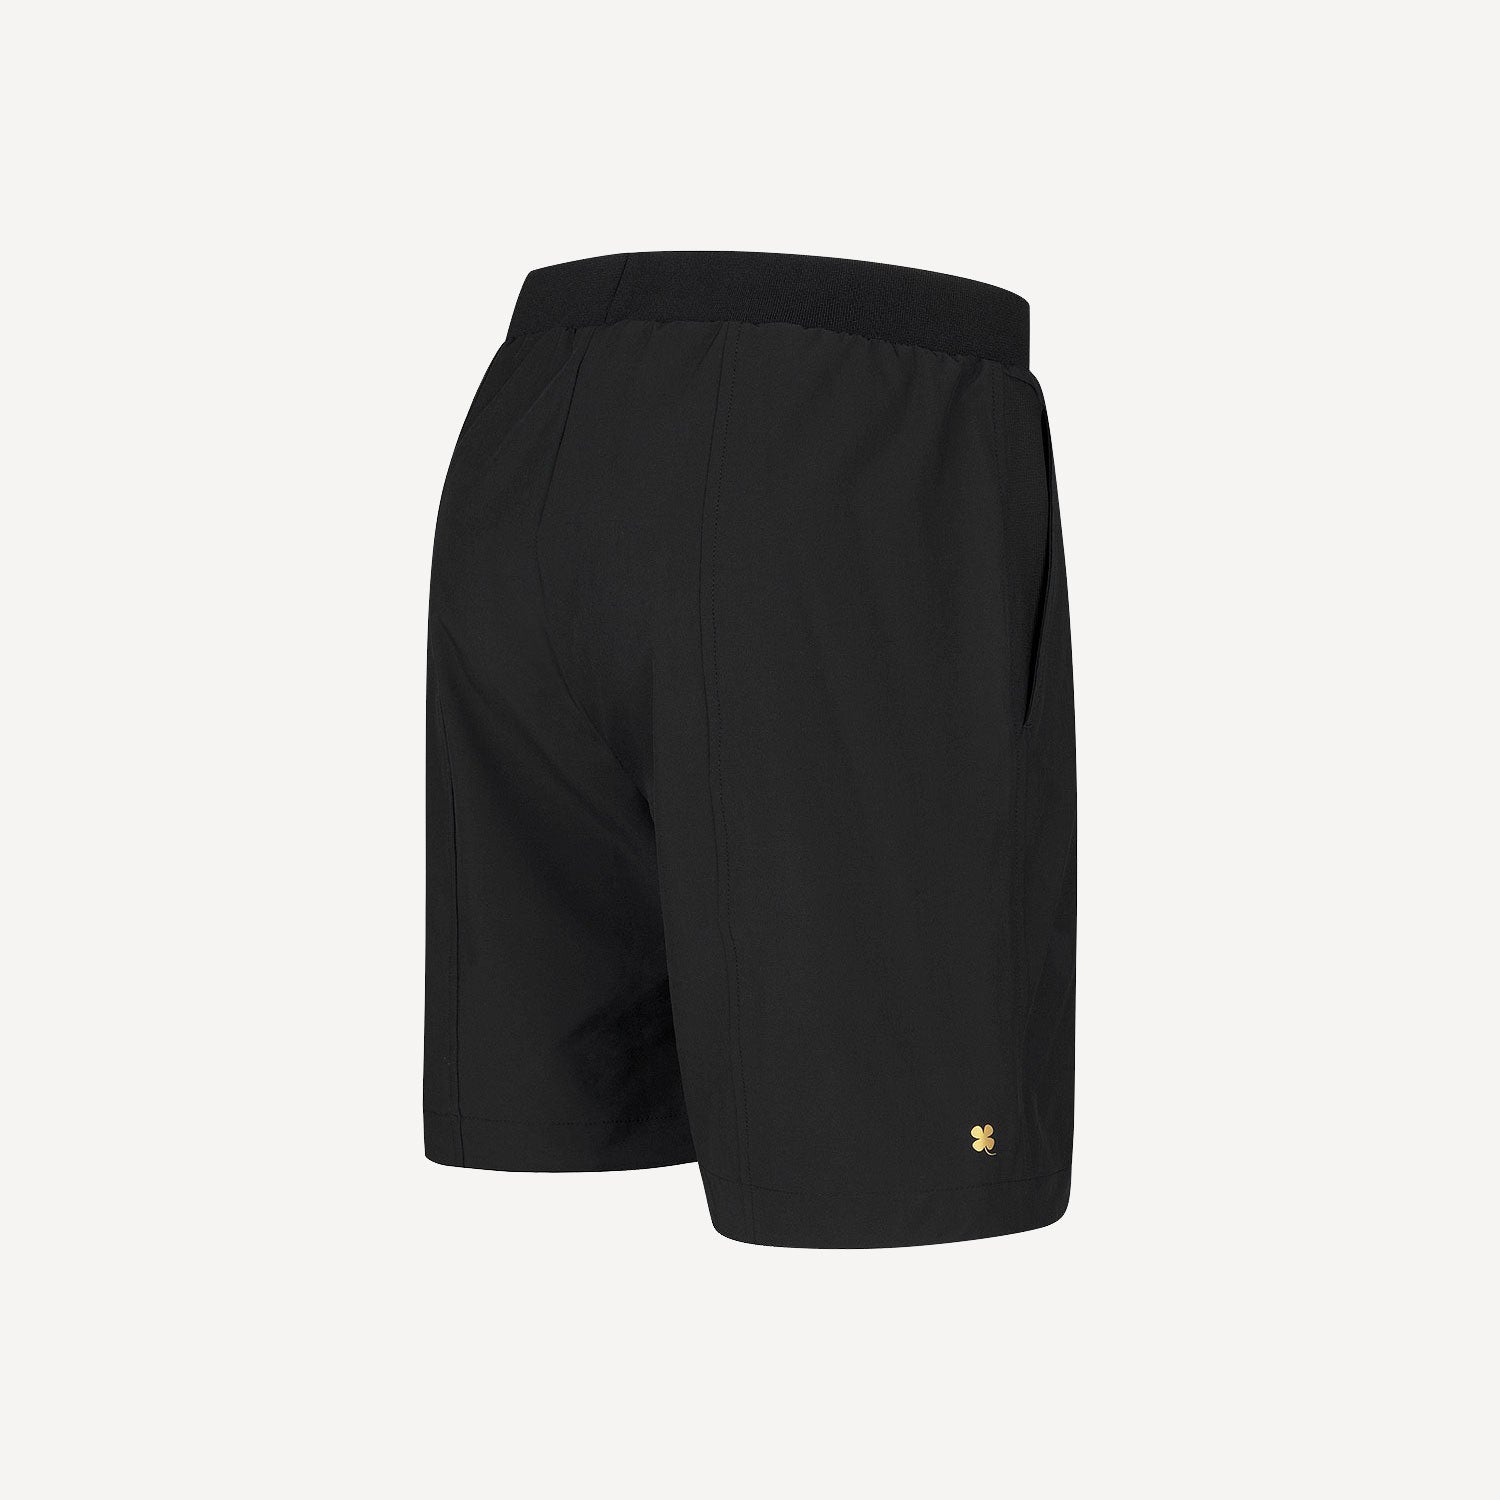 Robey Ace Men's Tennis Shorts - Black (4)